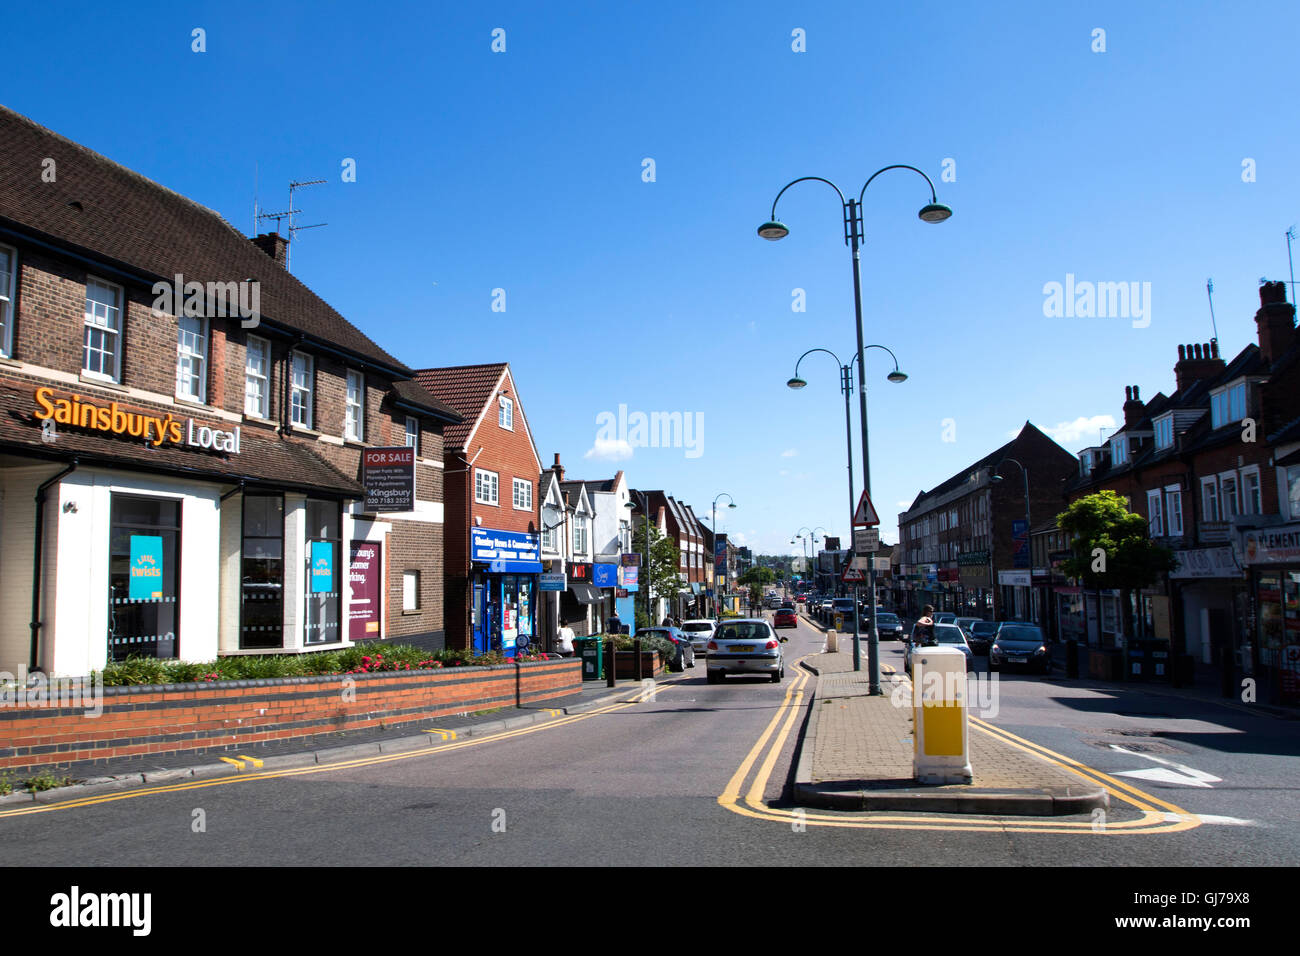 Shenley Road, Borehamwood high street with Sainsbury's local Stock Photo